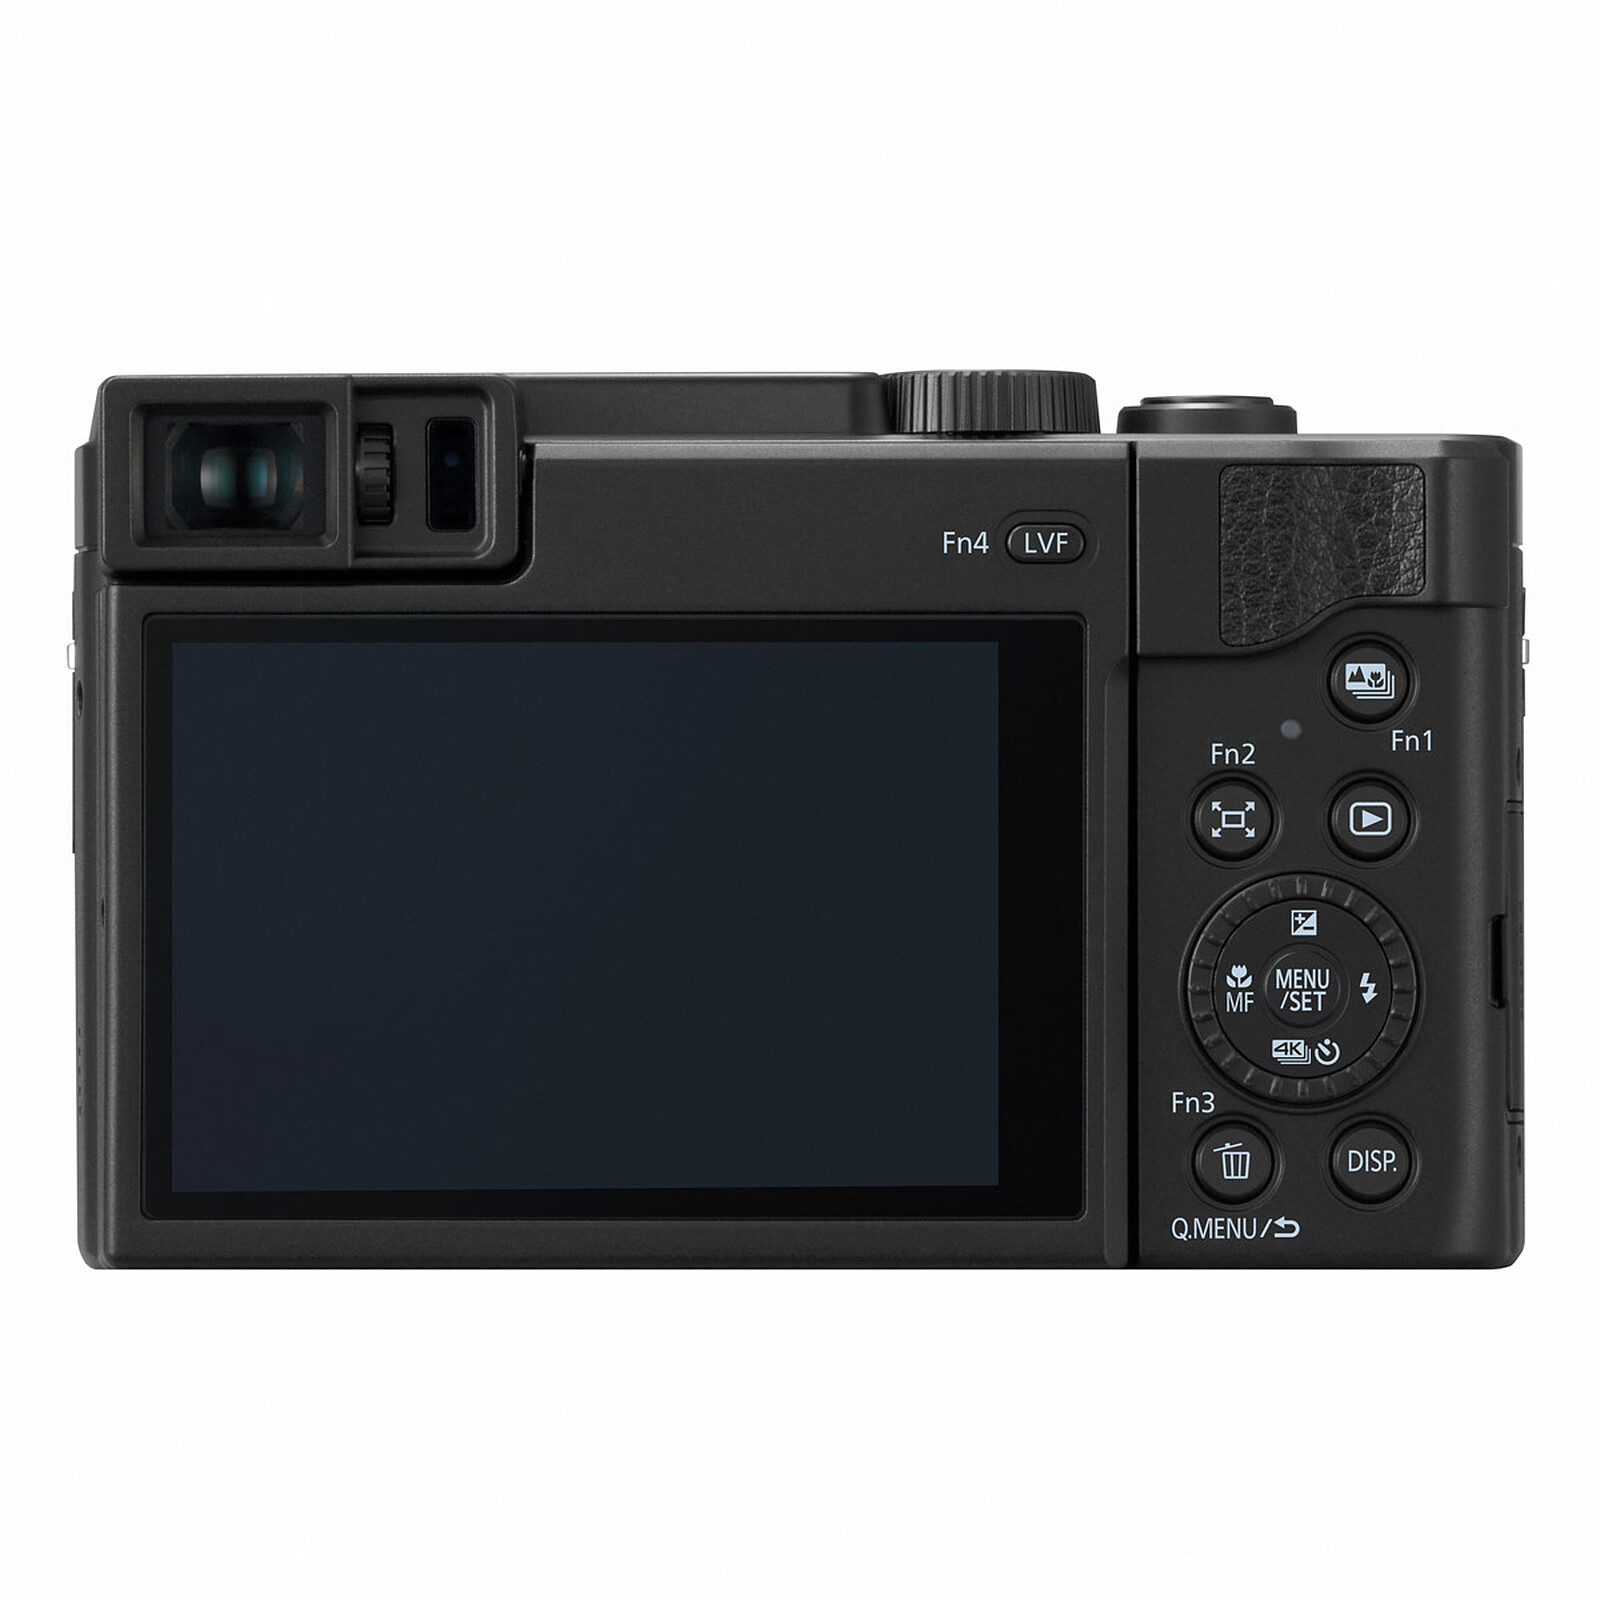 Panasonic DC-TZ95 Black - Compact camera - LDLC 3-year warranty